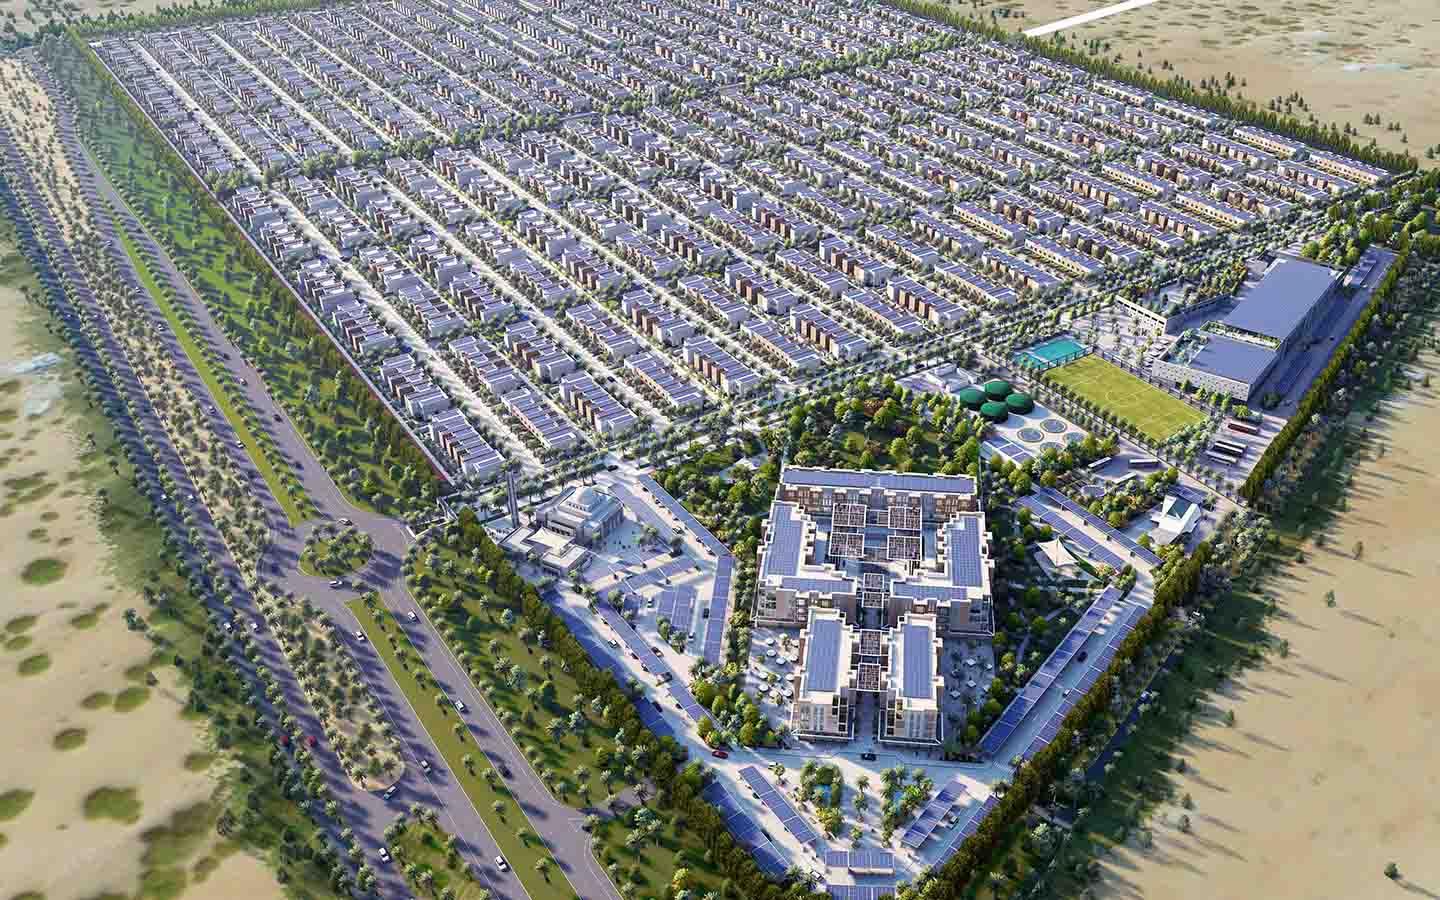 Masterplan of the sustainability city sharjah